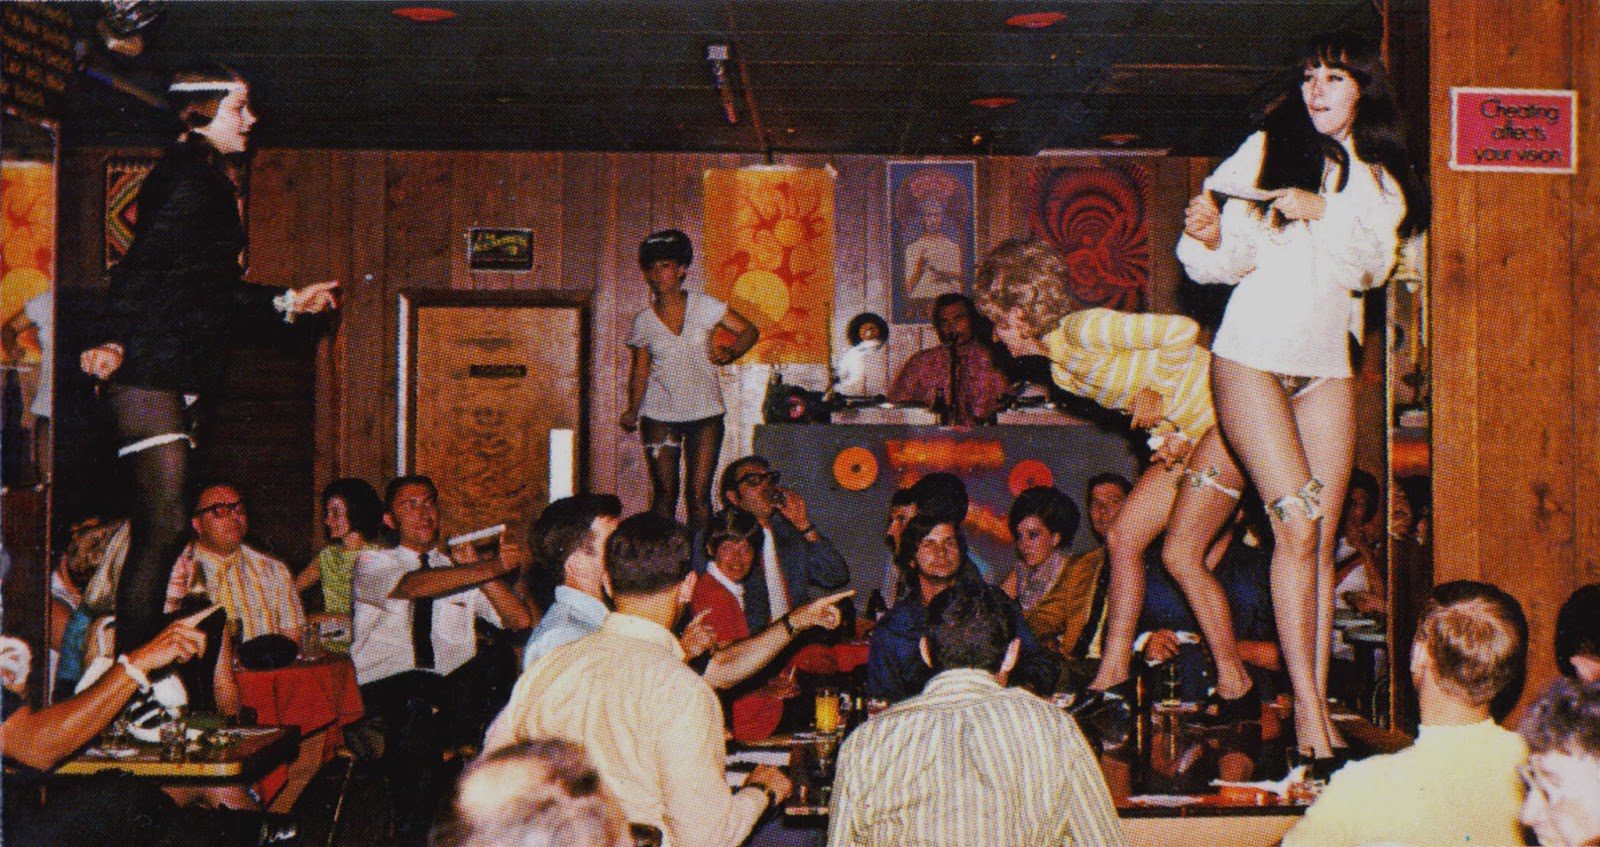 Sexy table Dancing at Tony’s restaurant Springfield Illinois